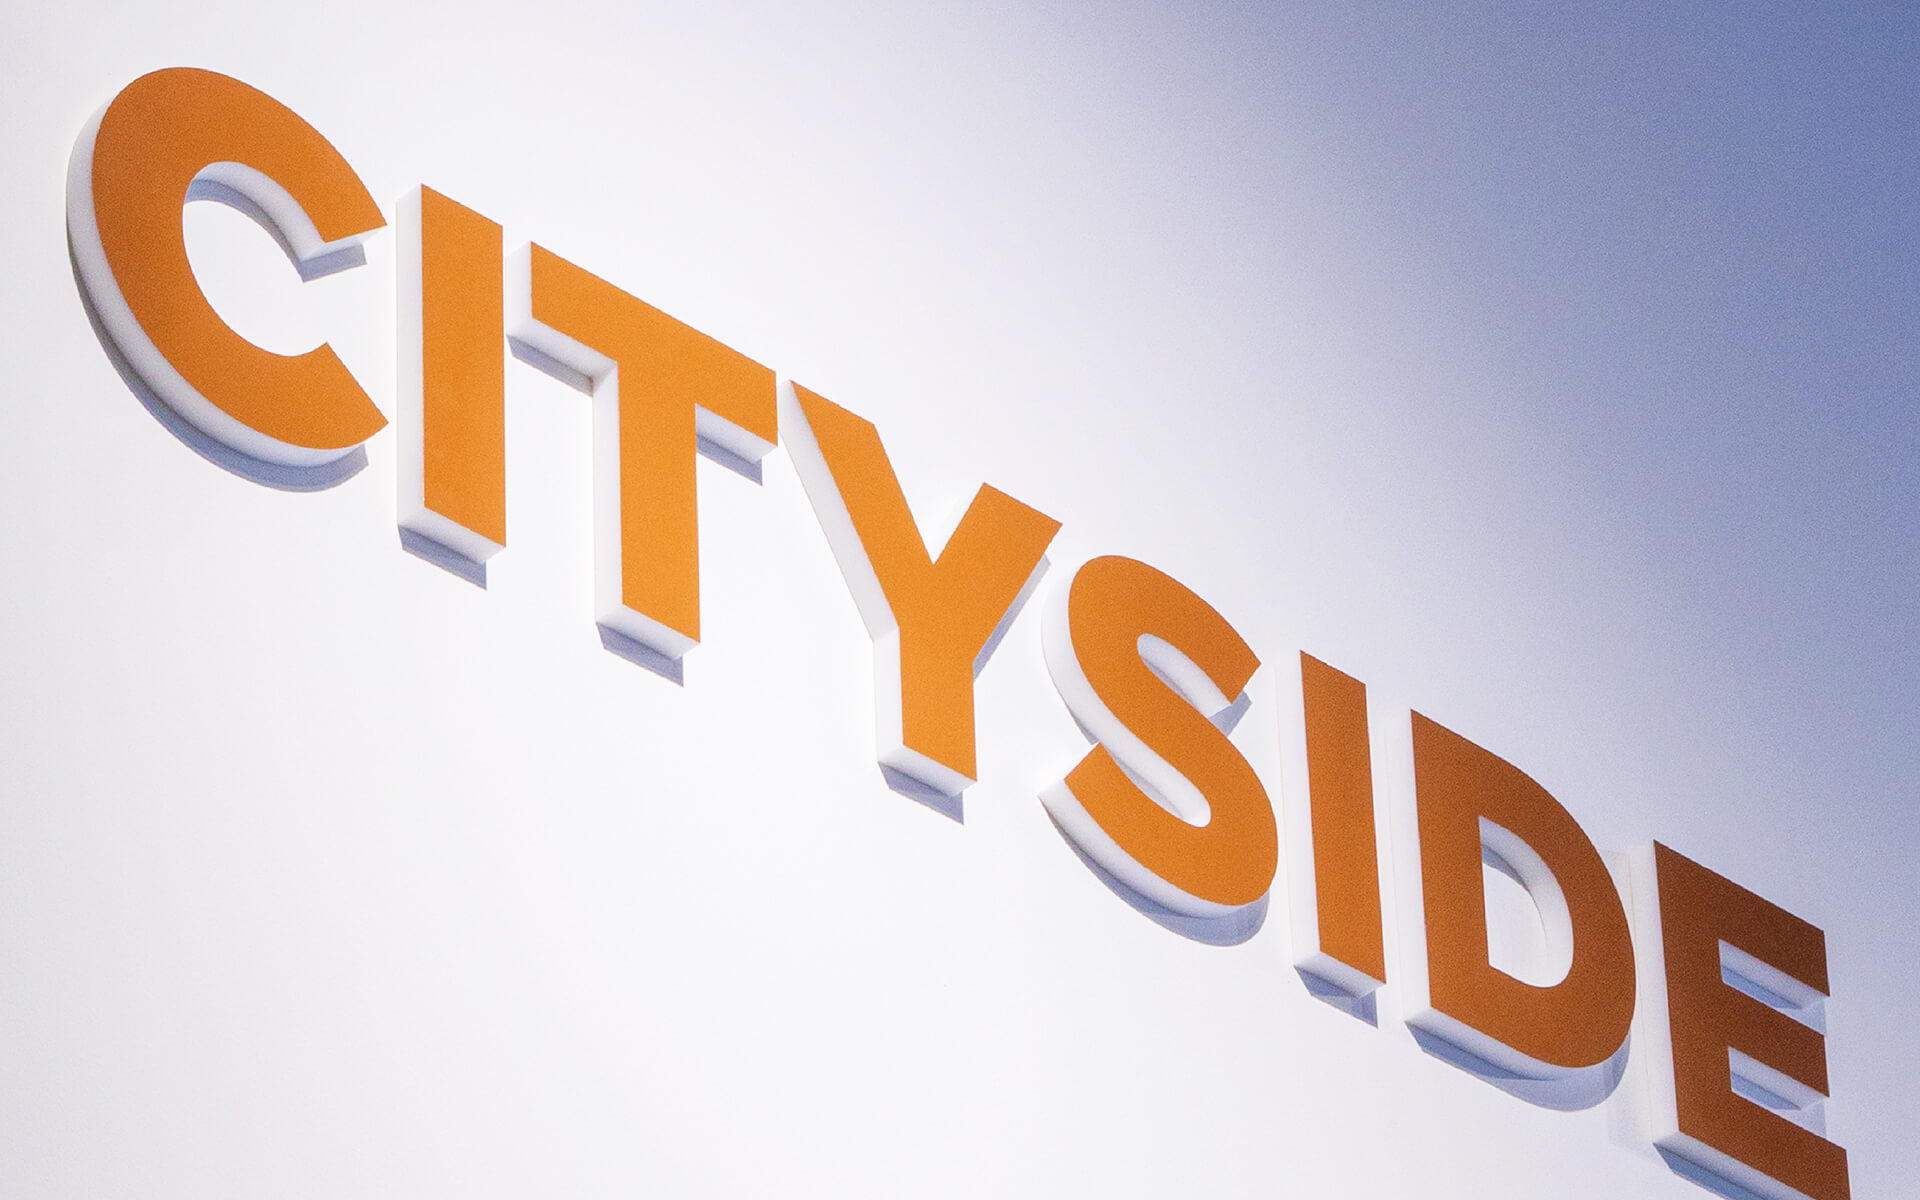 CitySide